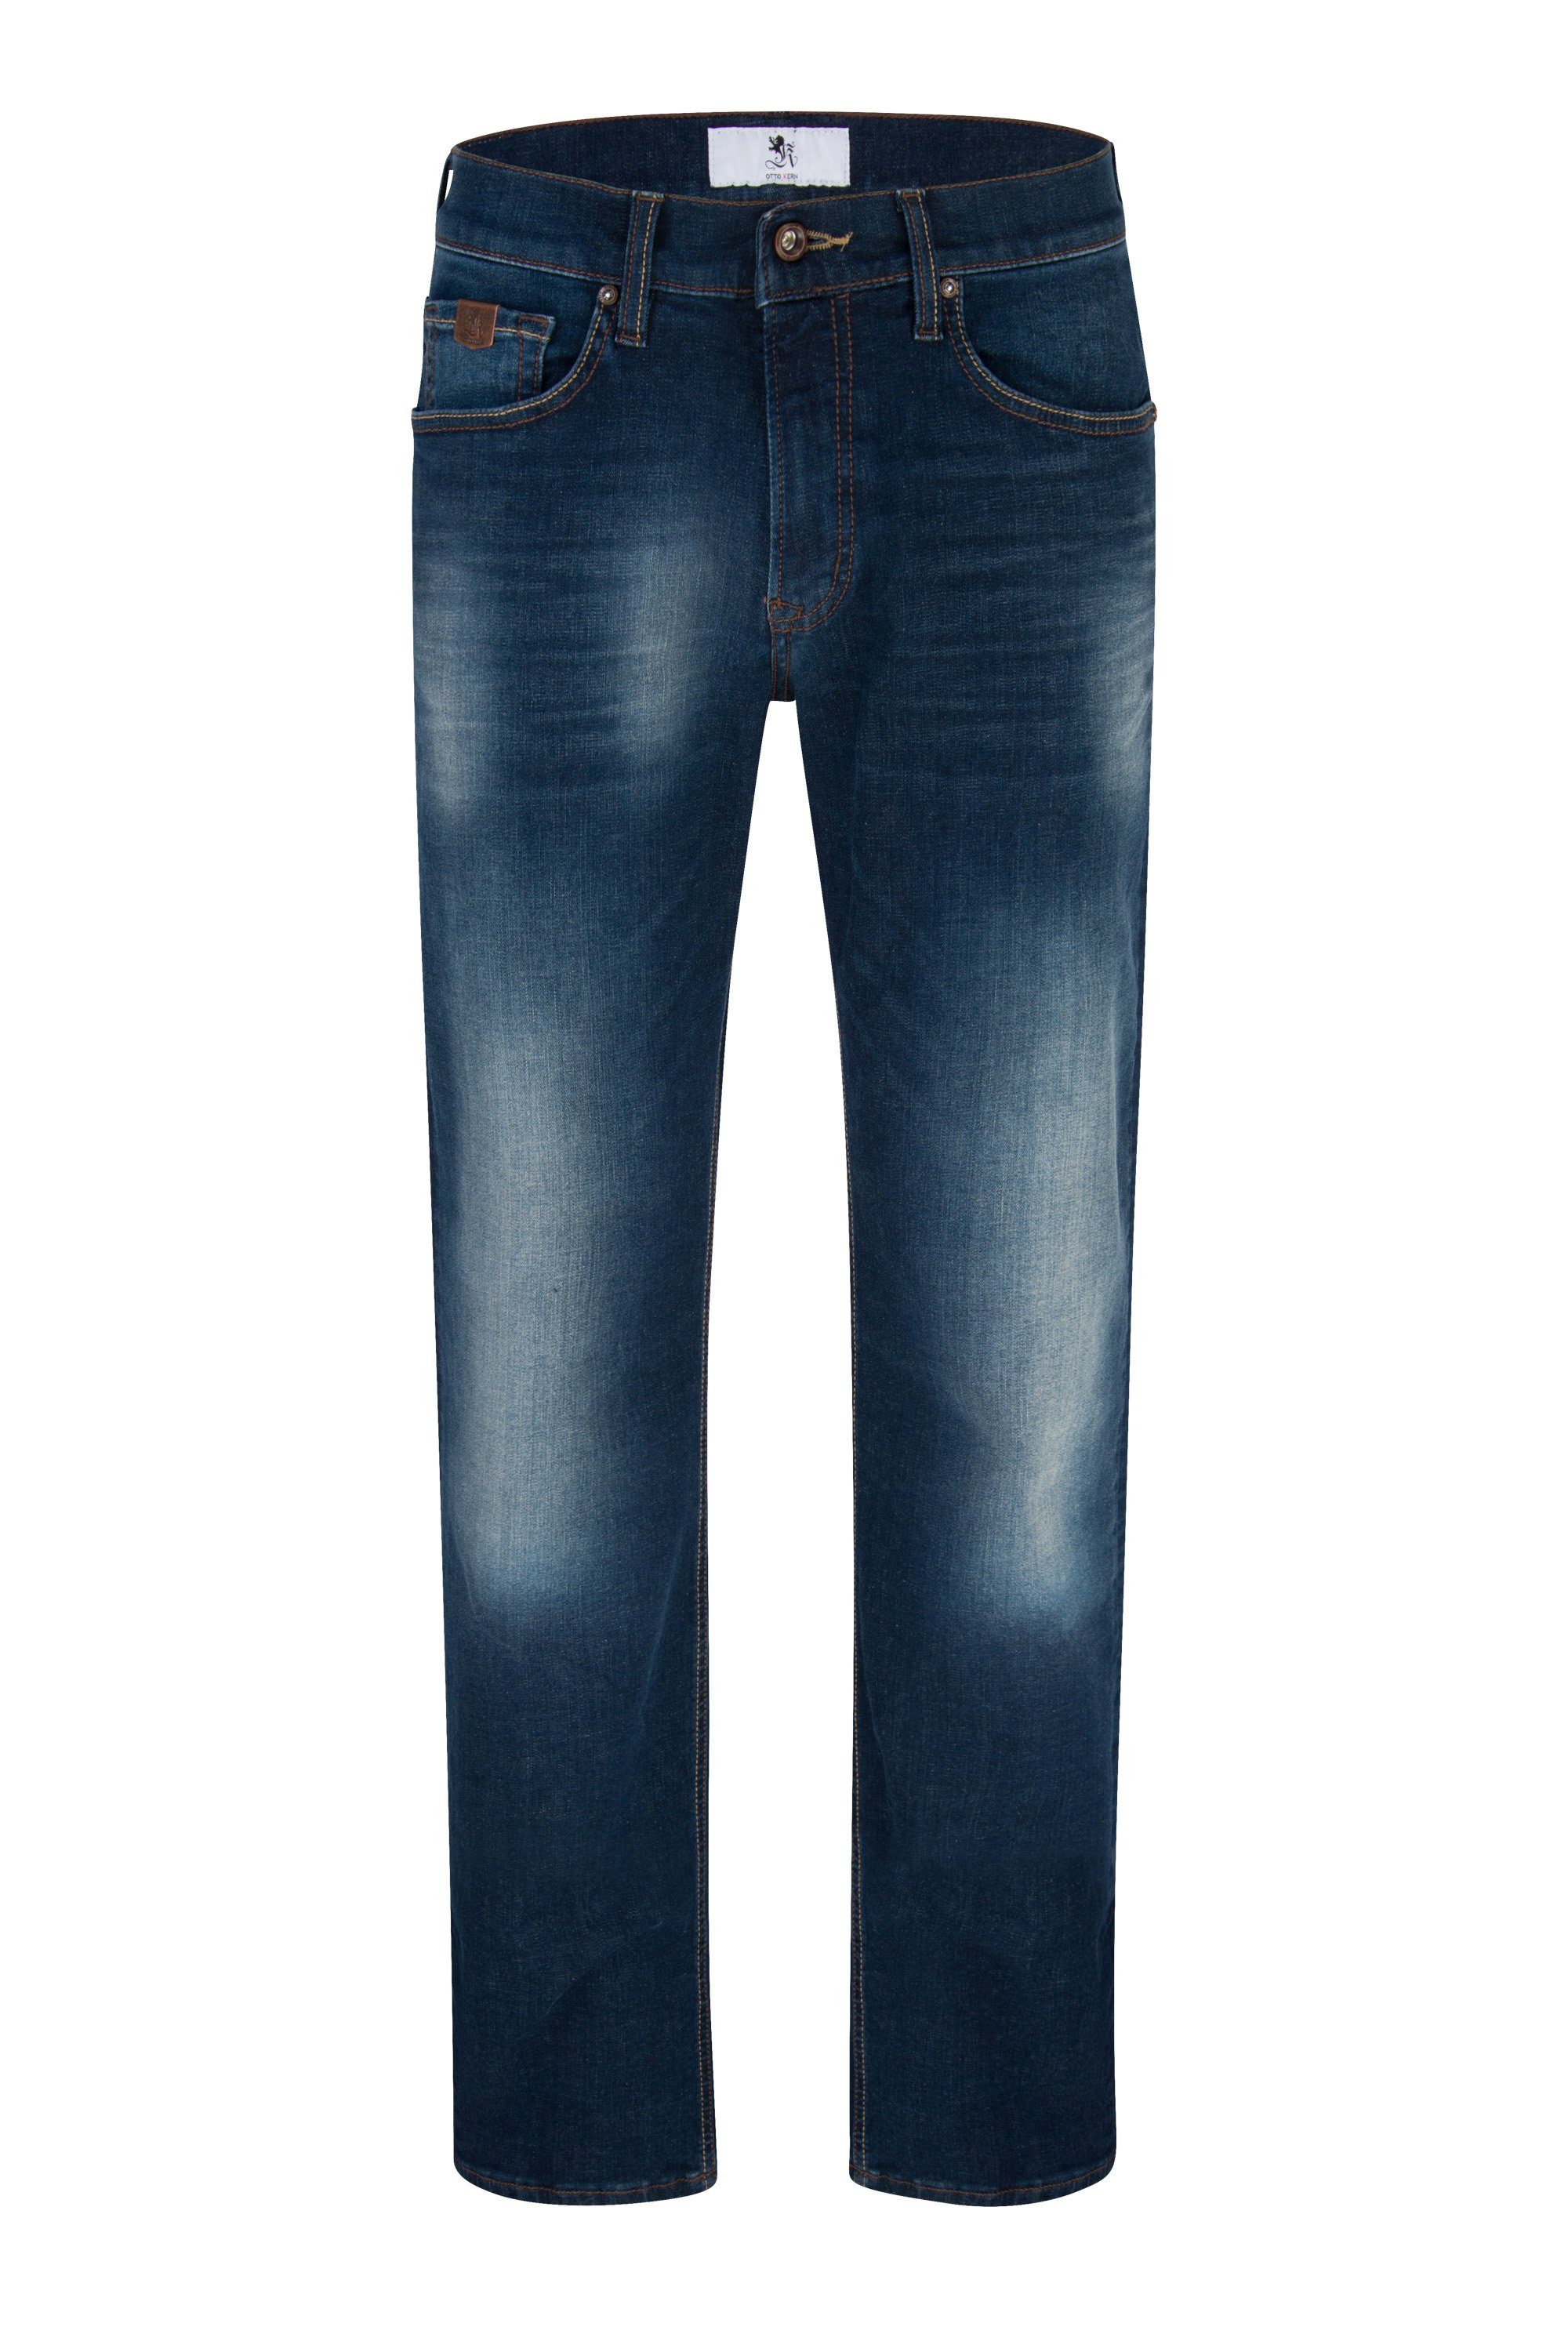  Kern 5-Pocket-Jeans OTTO KERN RAY dark blue used buffies 67001 6831.6814 - Pure Dynamic